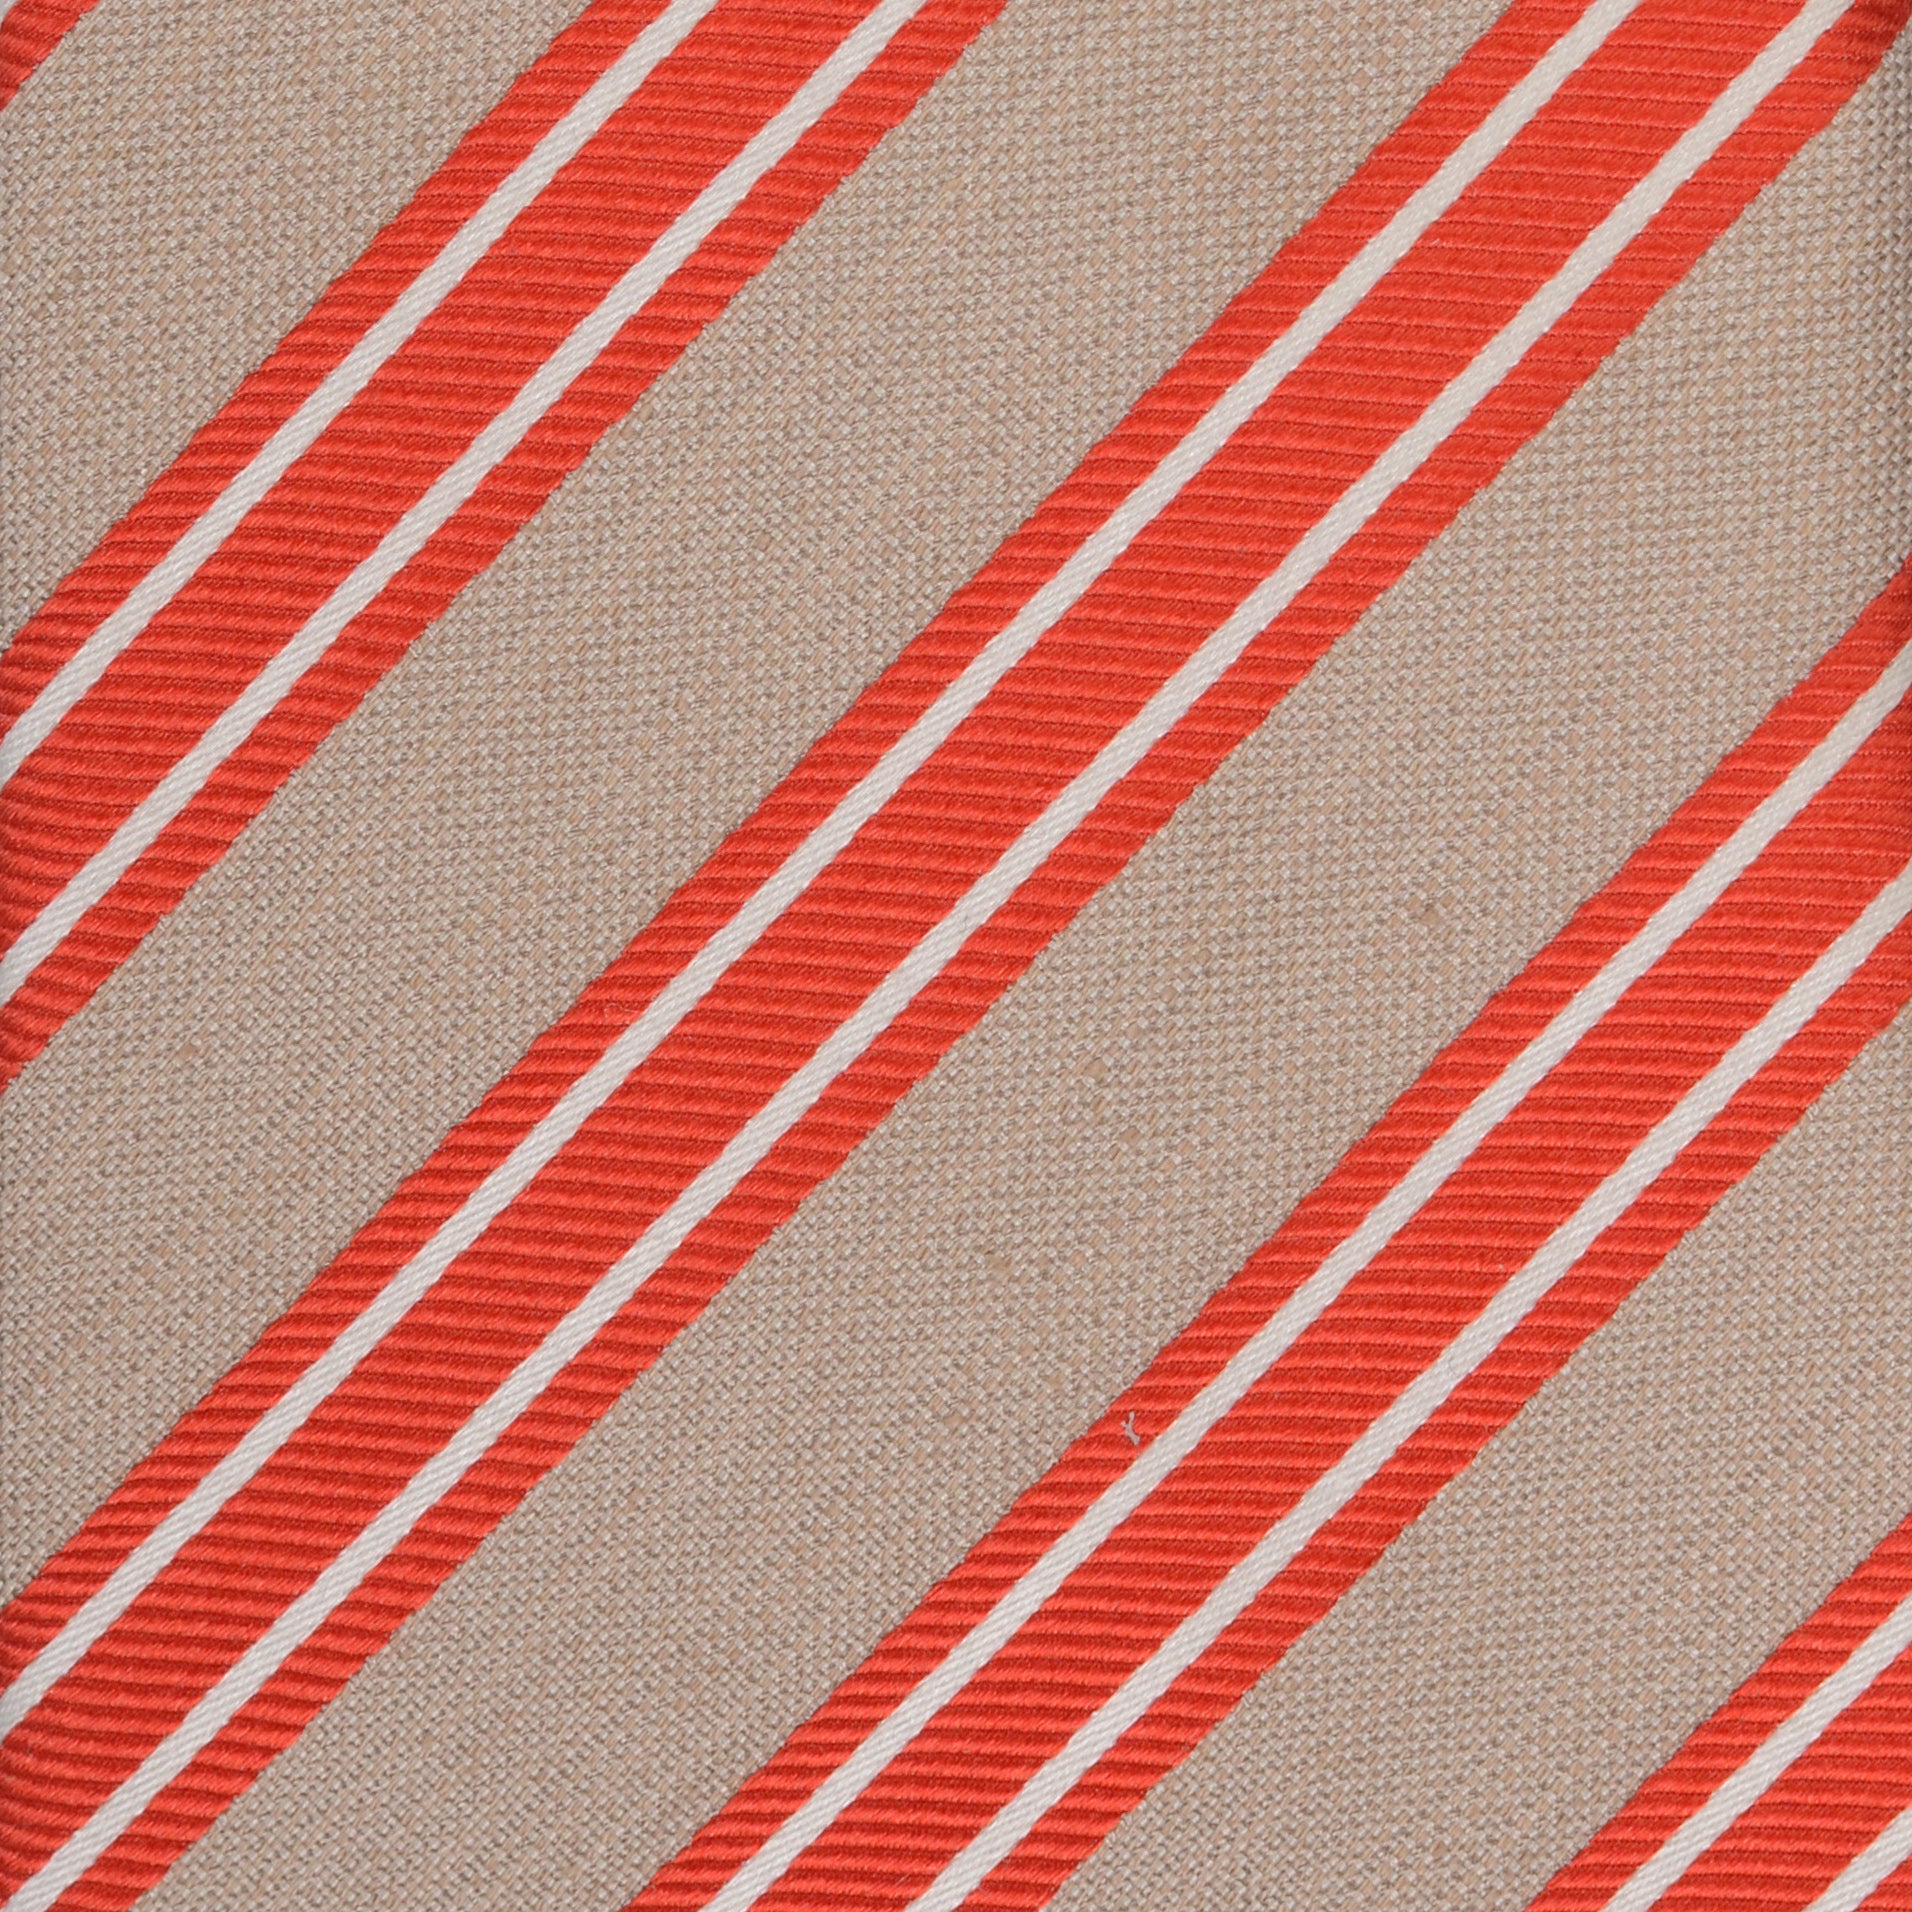 KITON Napoli Hand-Made Seven Fold Beige Narrow-Striped Silk Tie NEW